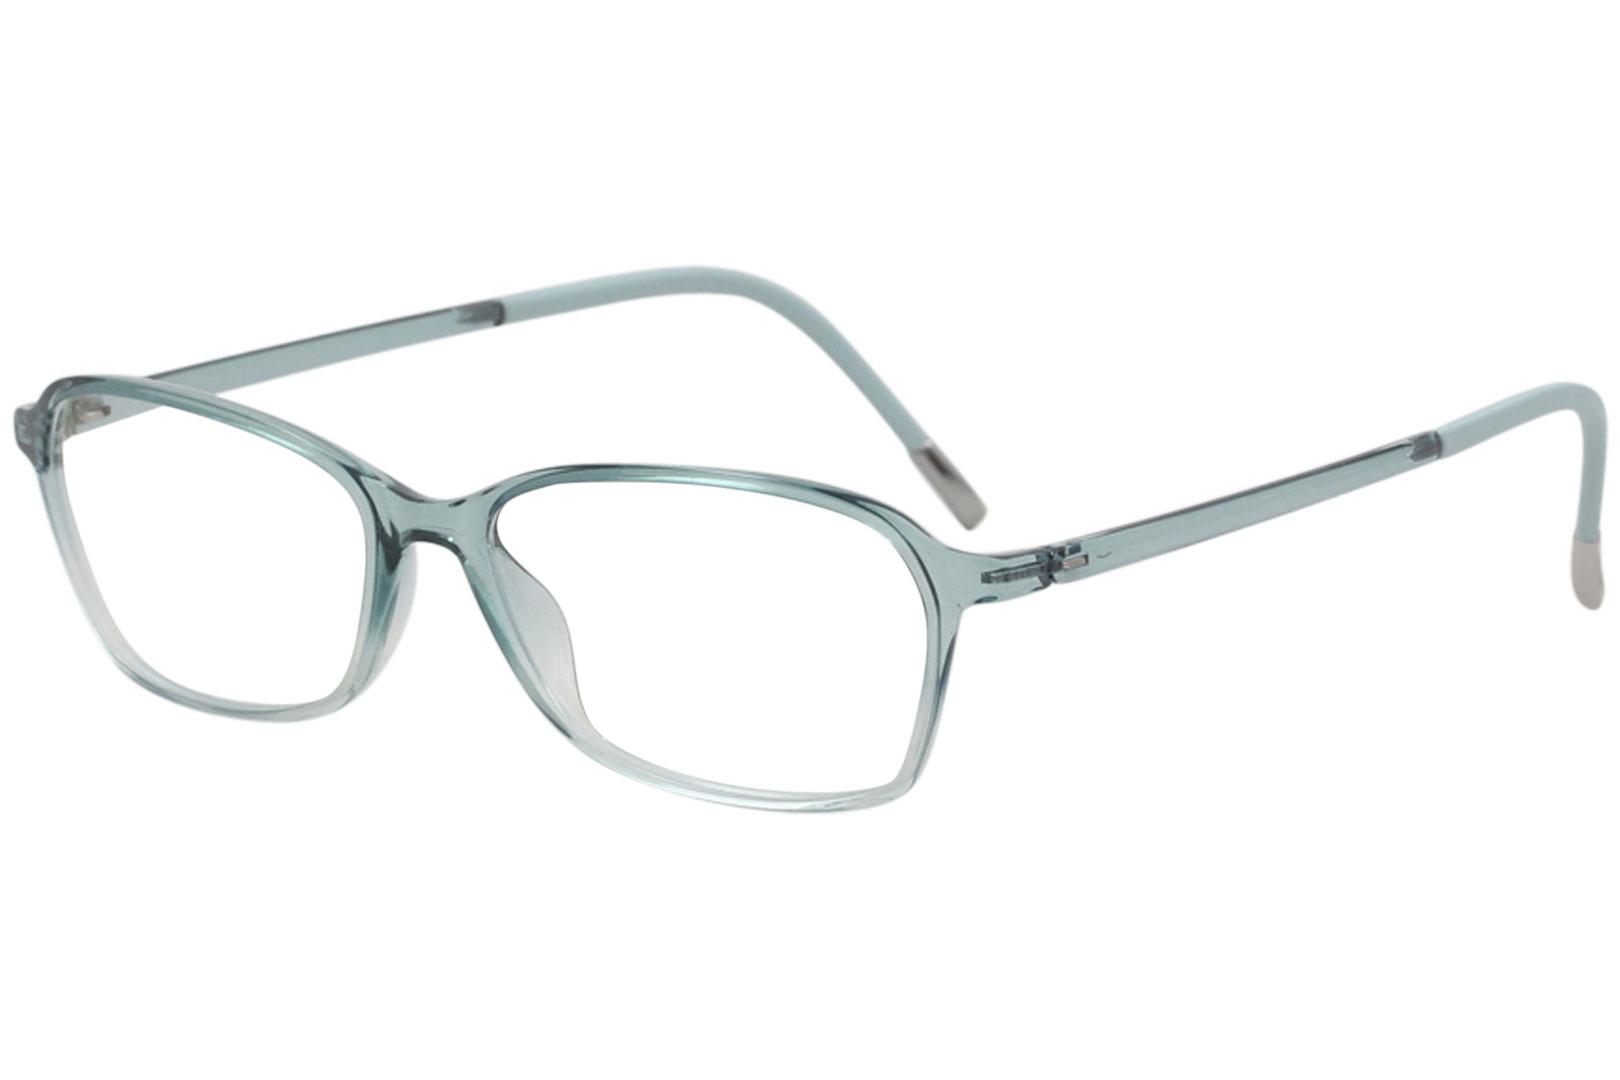 Silhouette Eyeglasses Spx Illusion 1605 1583 5010 Turquoise 52 14 130mm